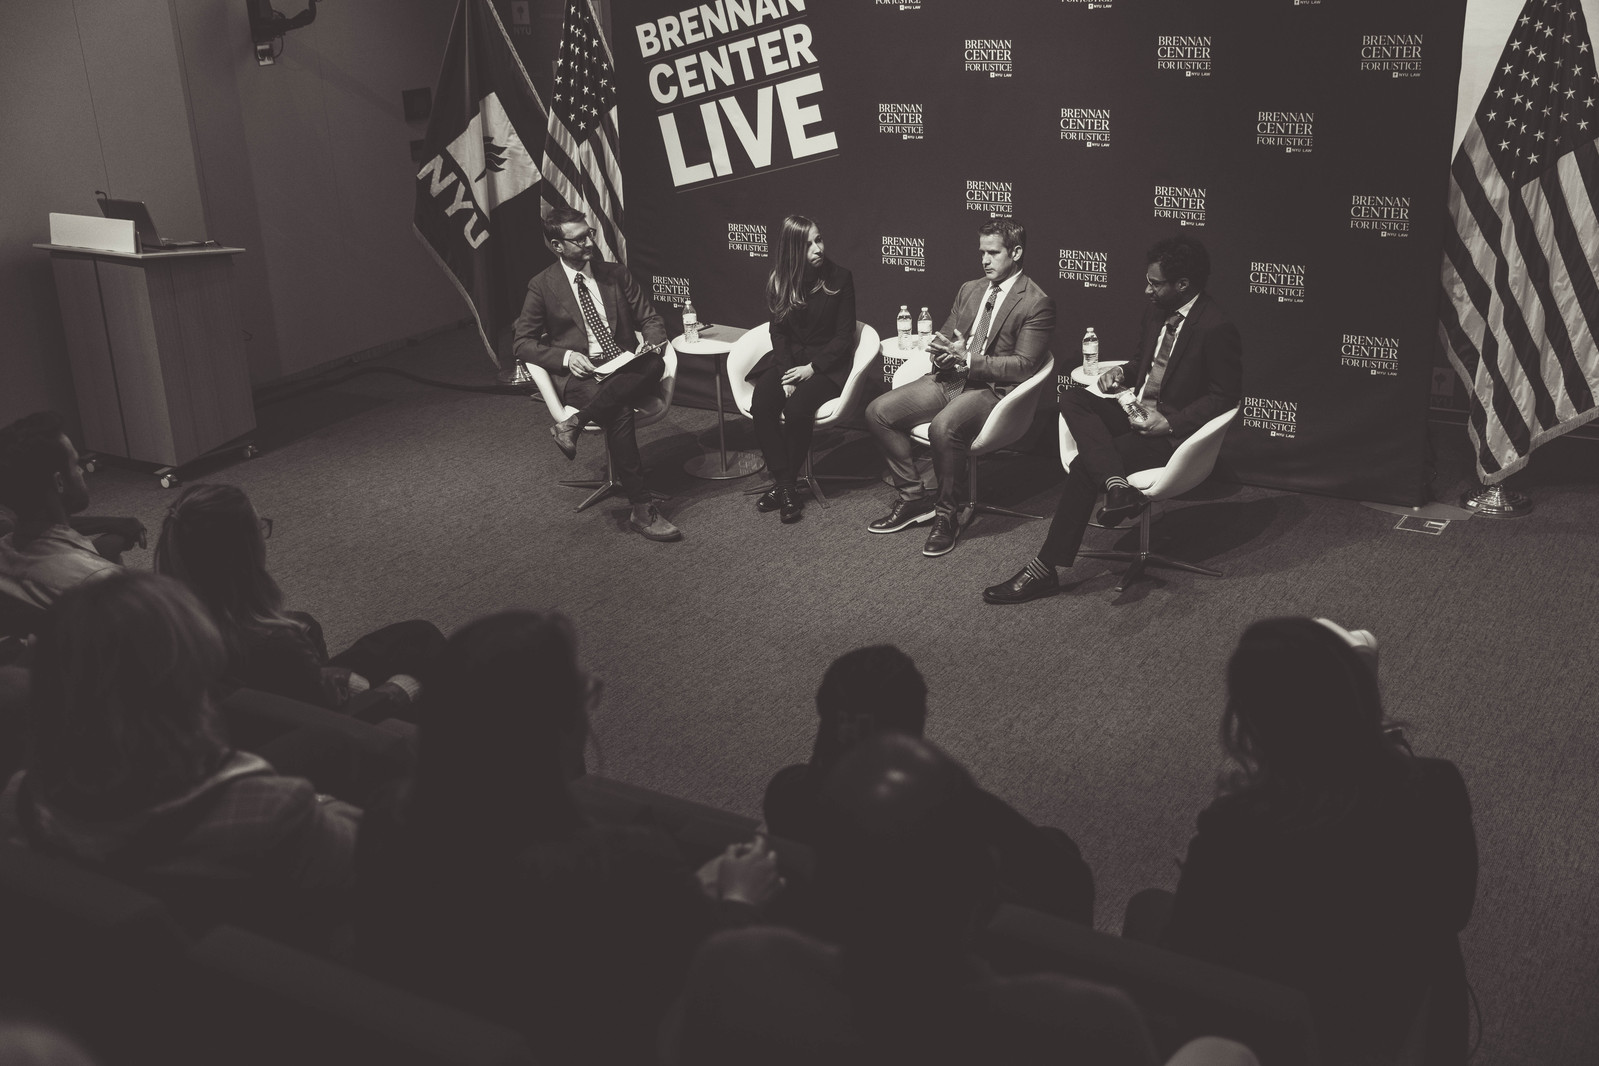 NYU DC Brennan Center live panel discussion. 